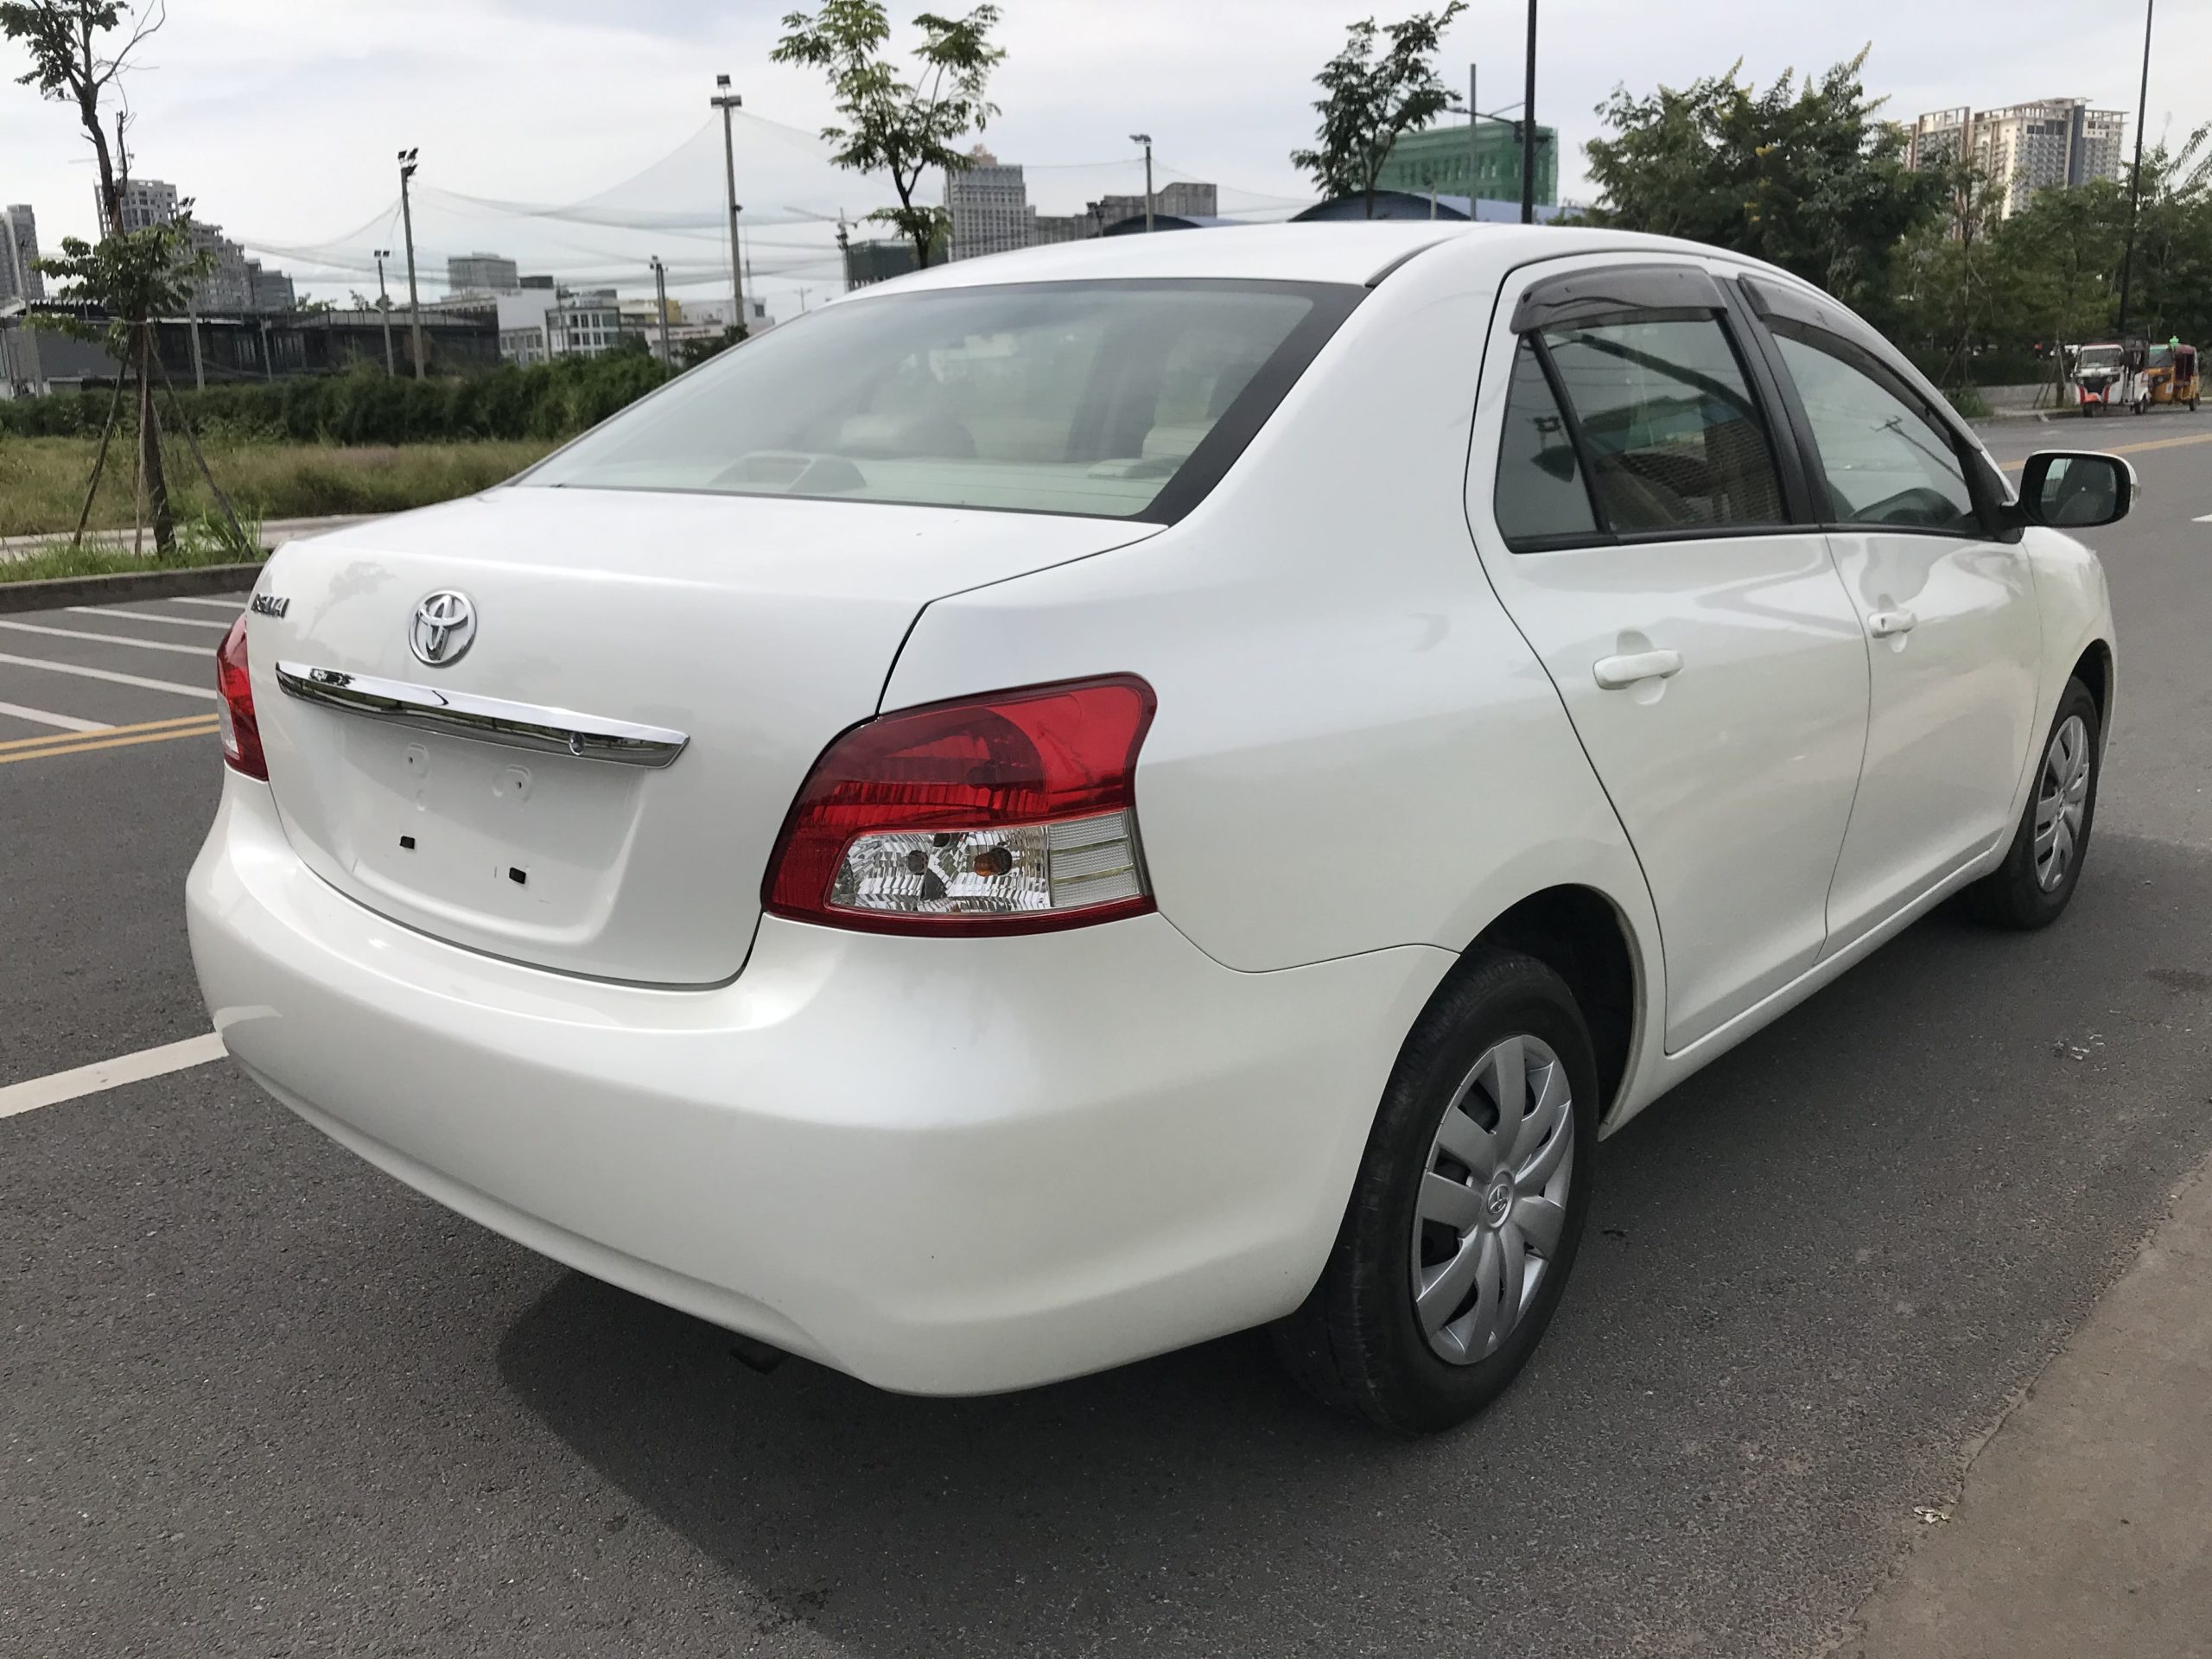 Toyota Belta White 09